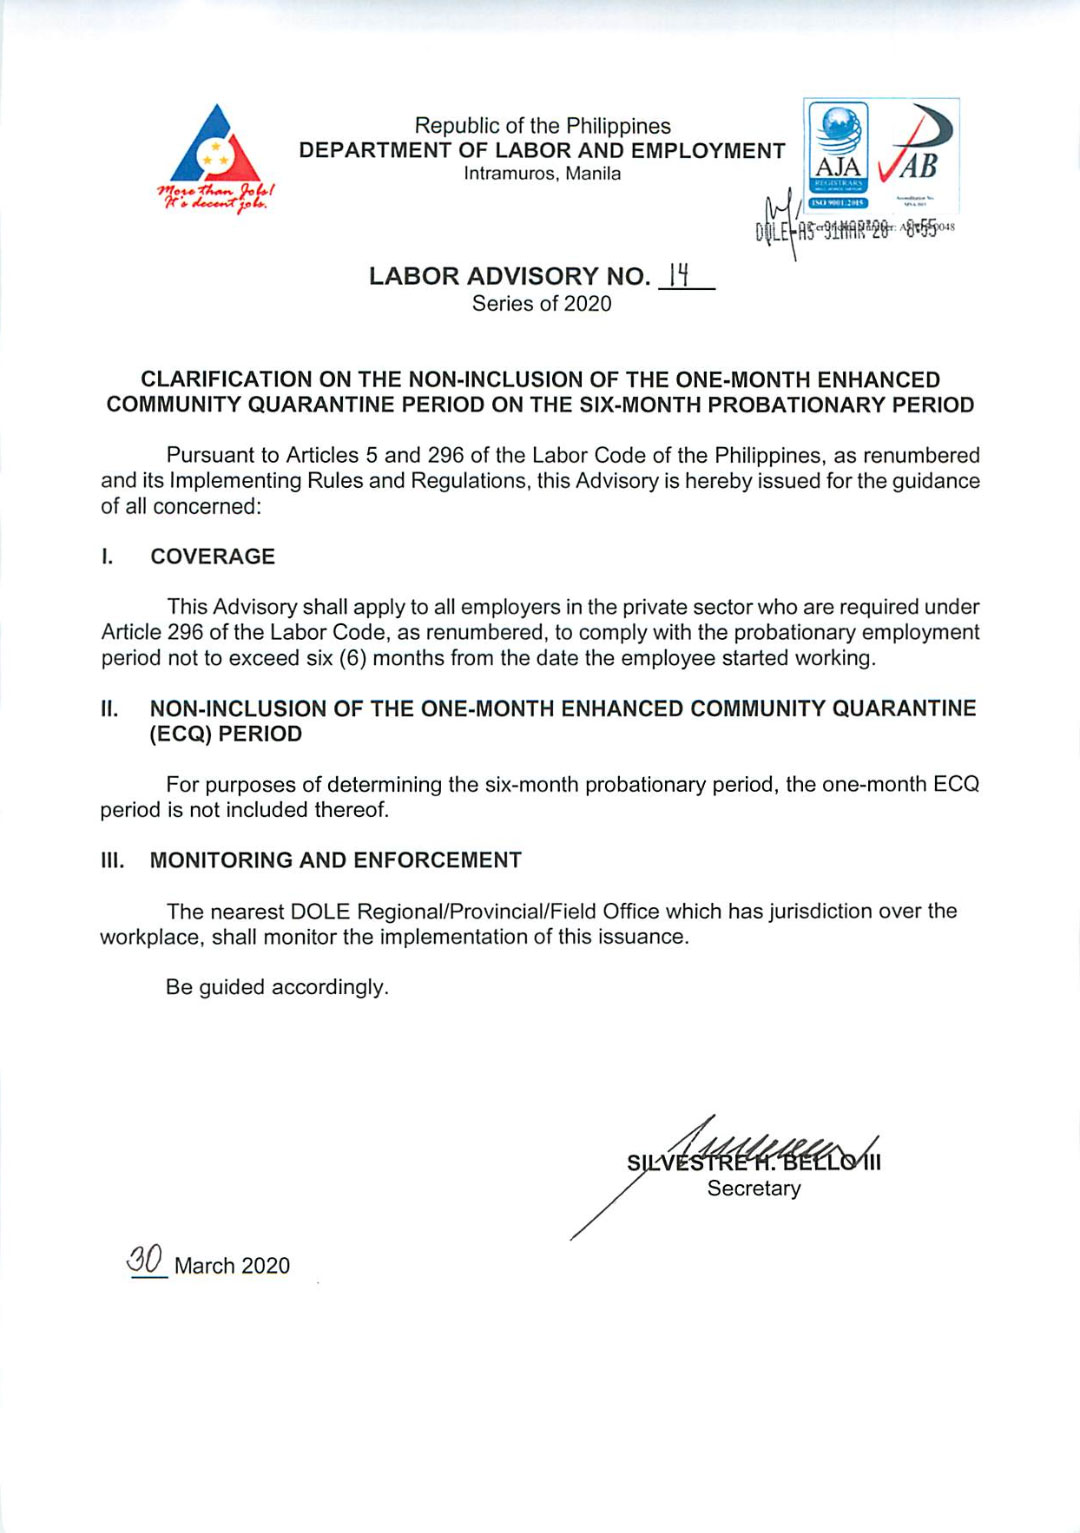 dole-labor-advisory-14-page-01.jpg